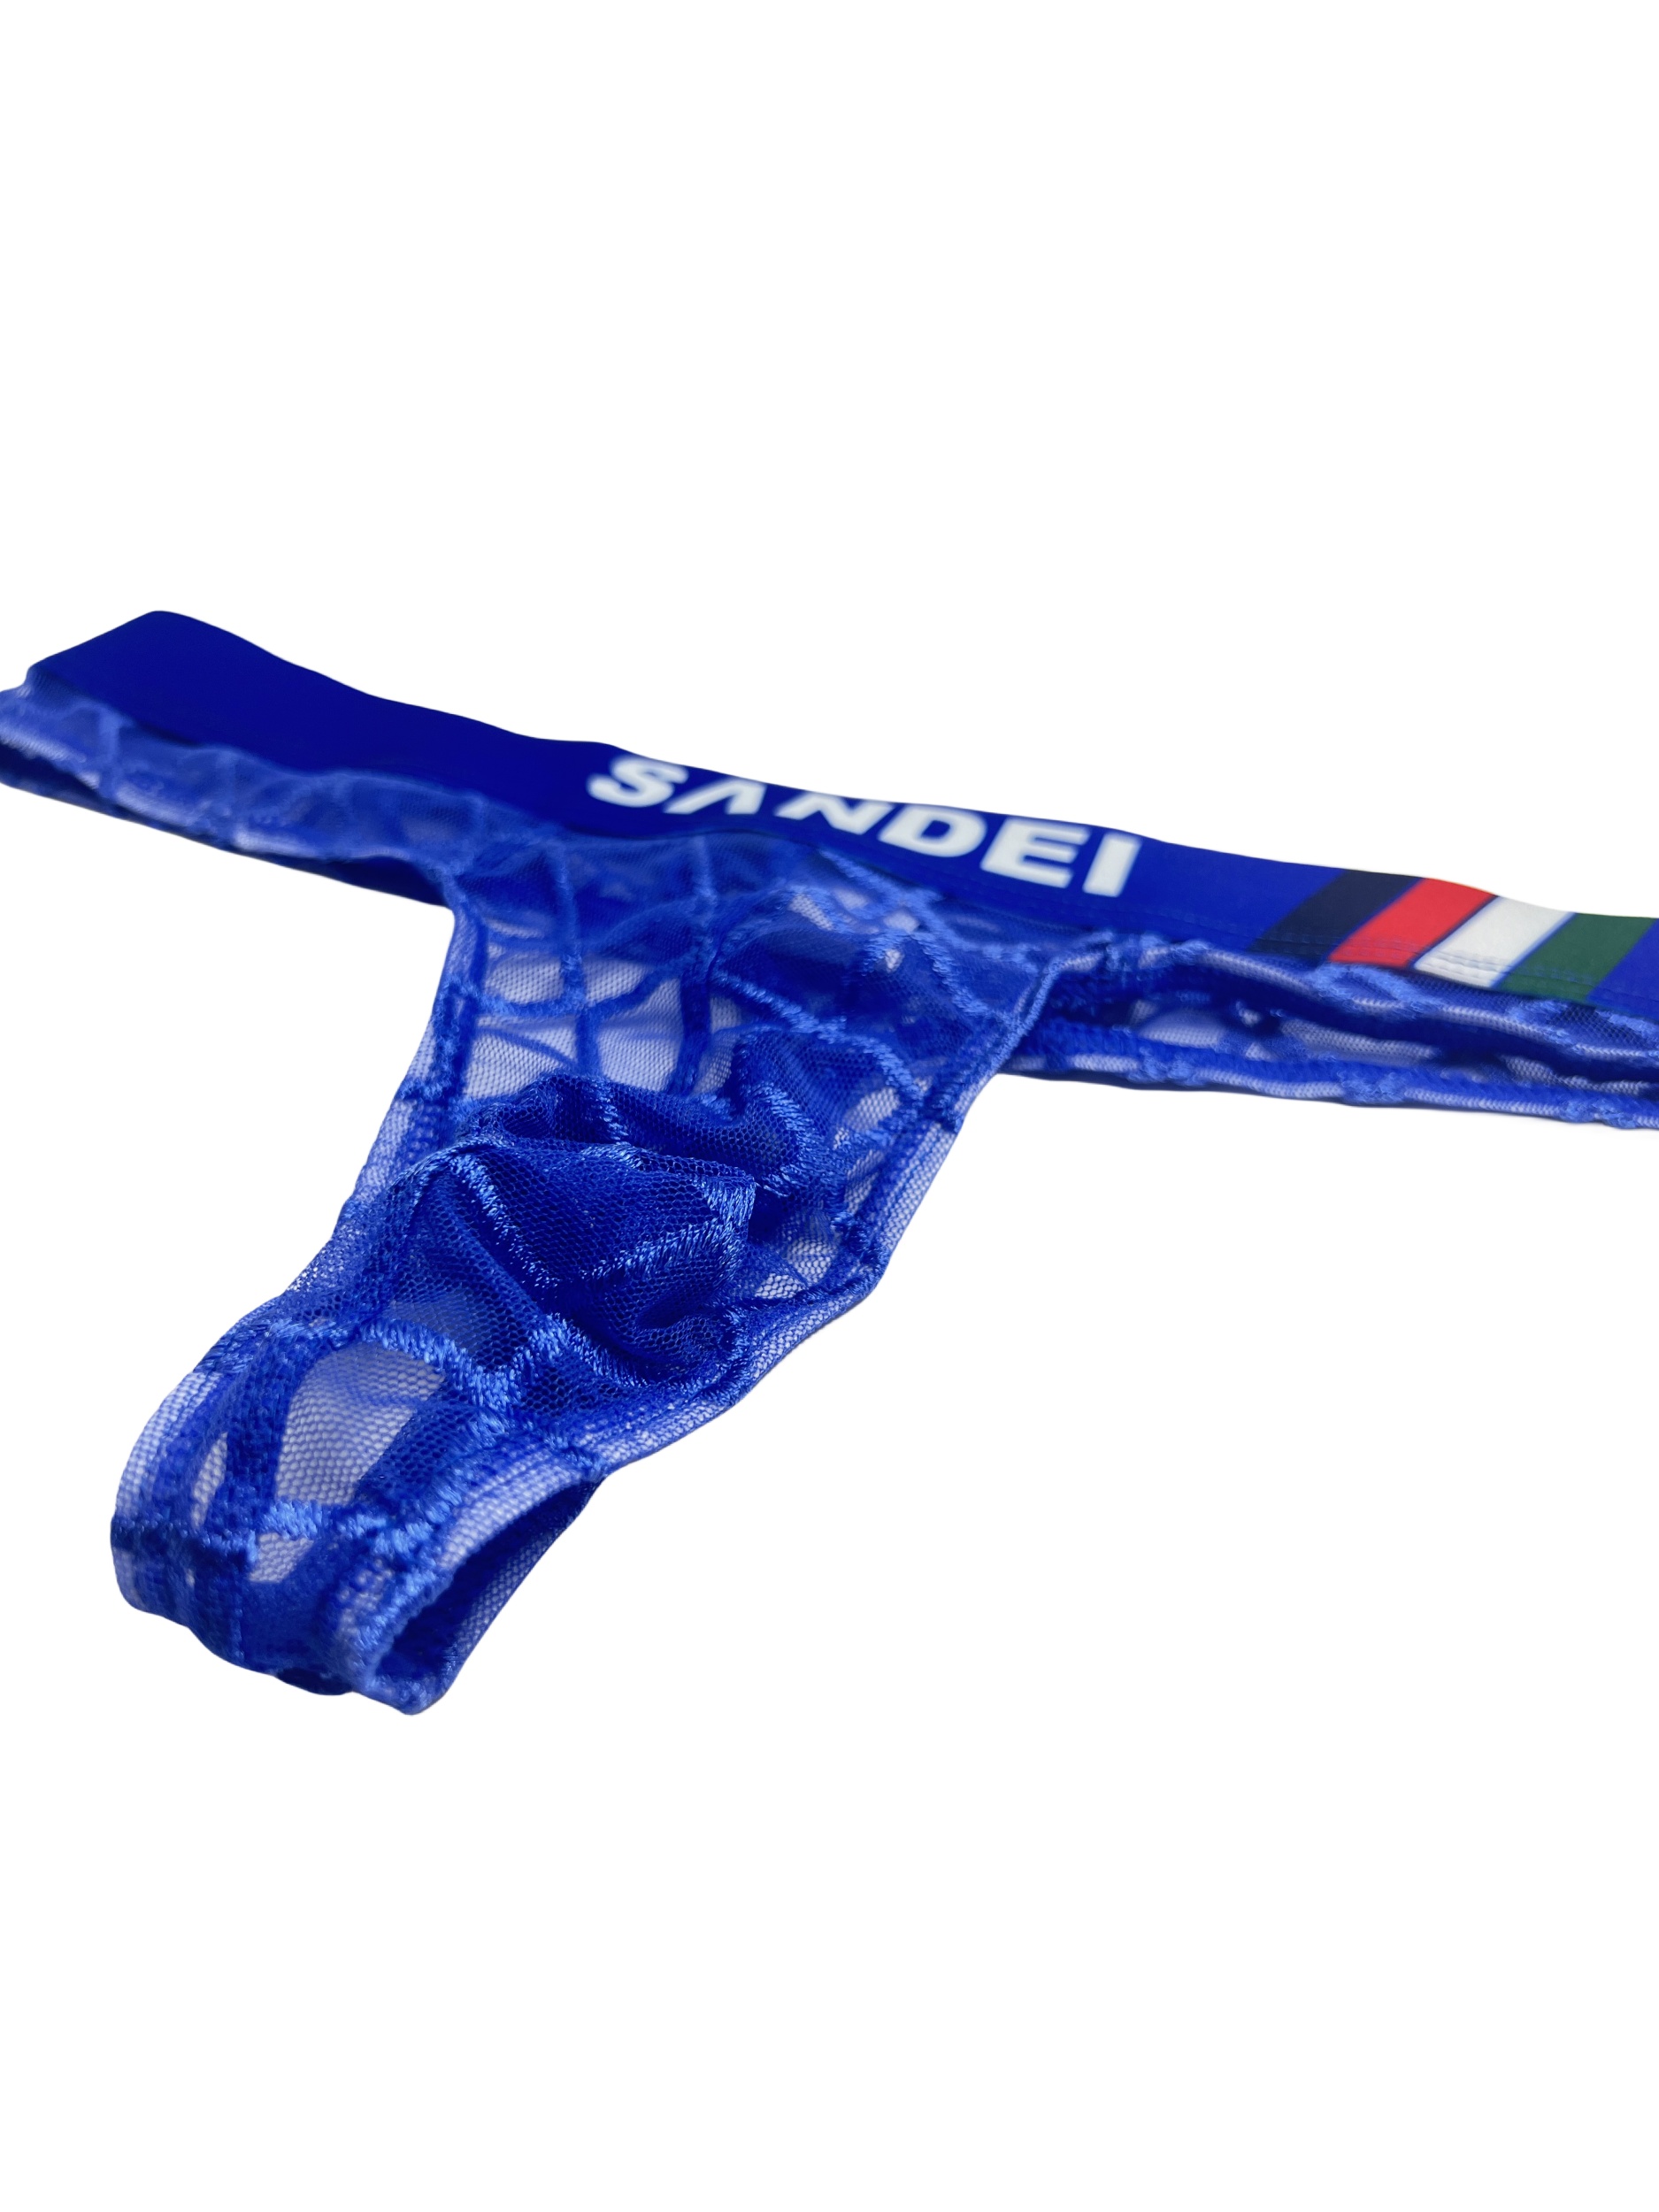 Soft mens transparent underwear jockstrap For Comfort 